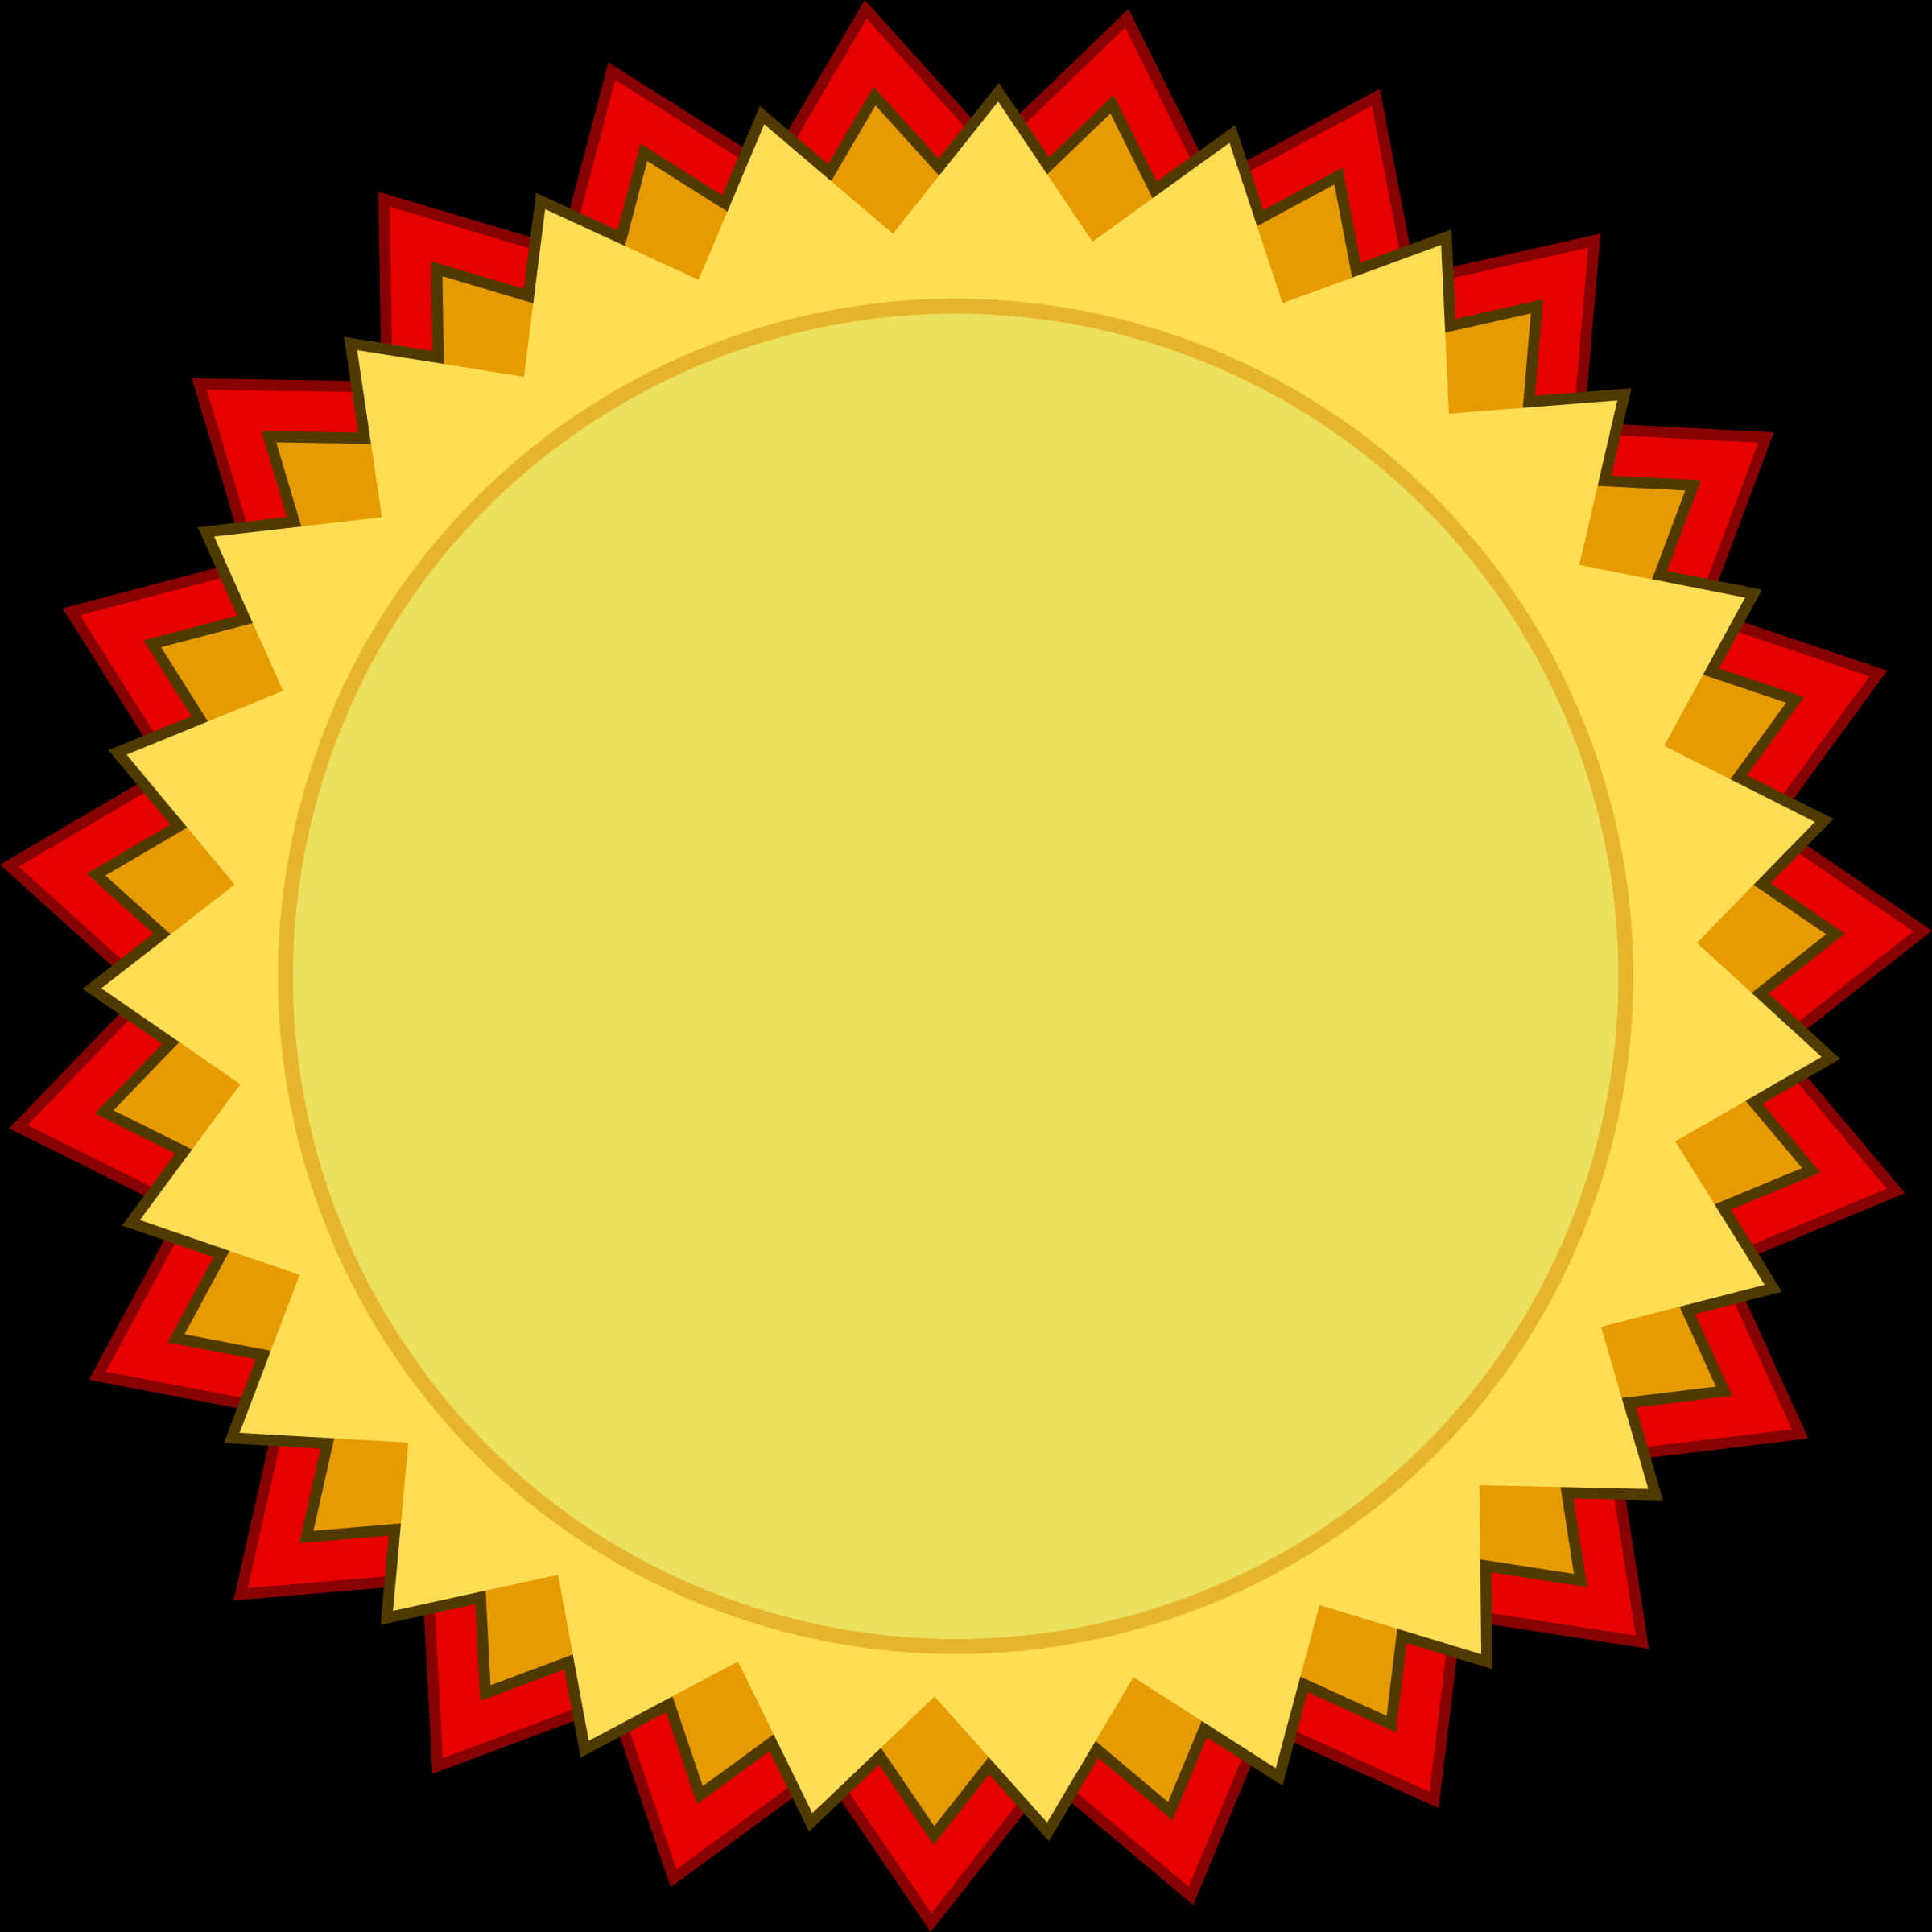 Golden Sunburst Graphic PNG image